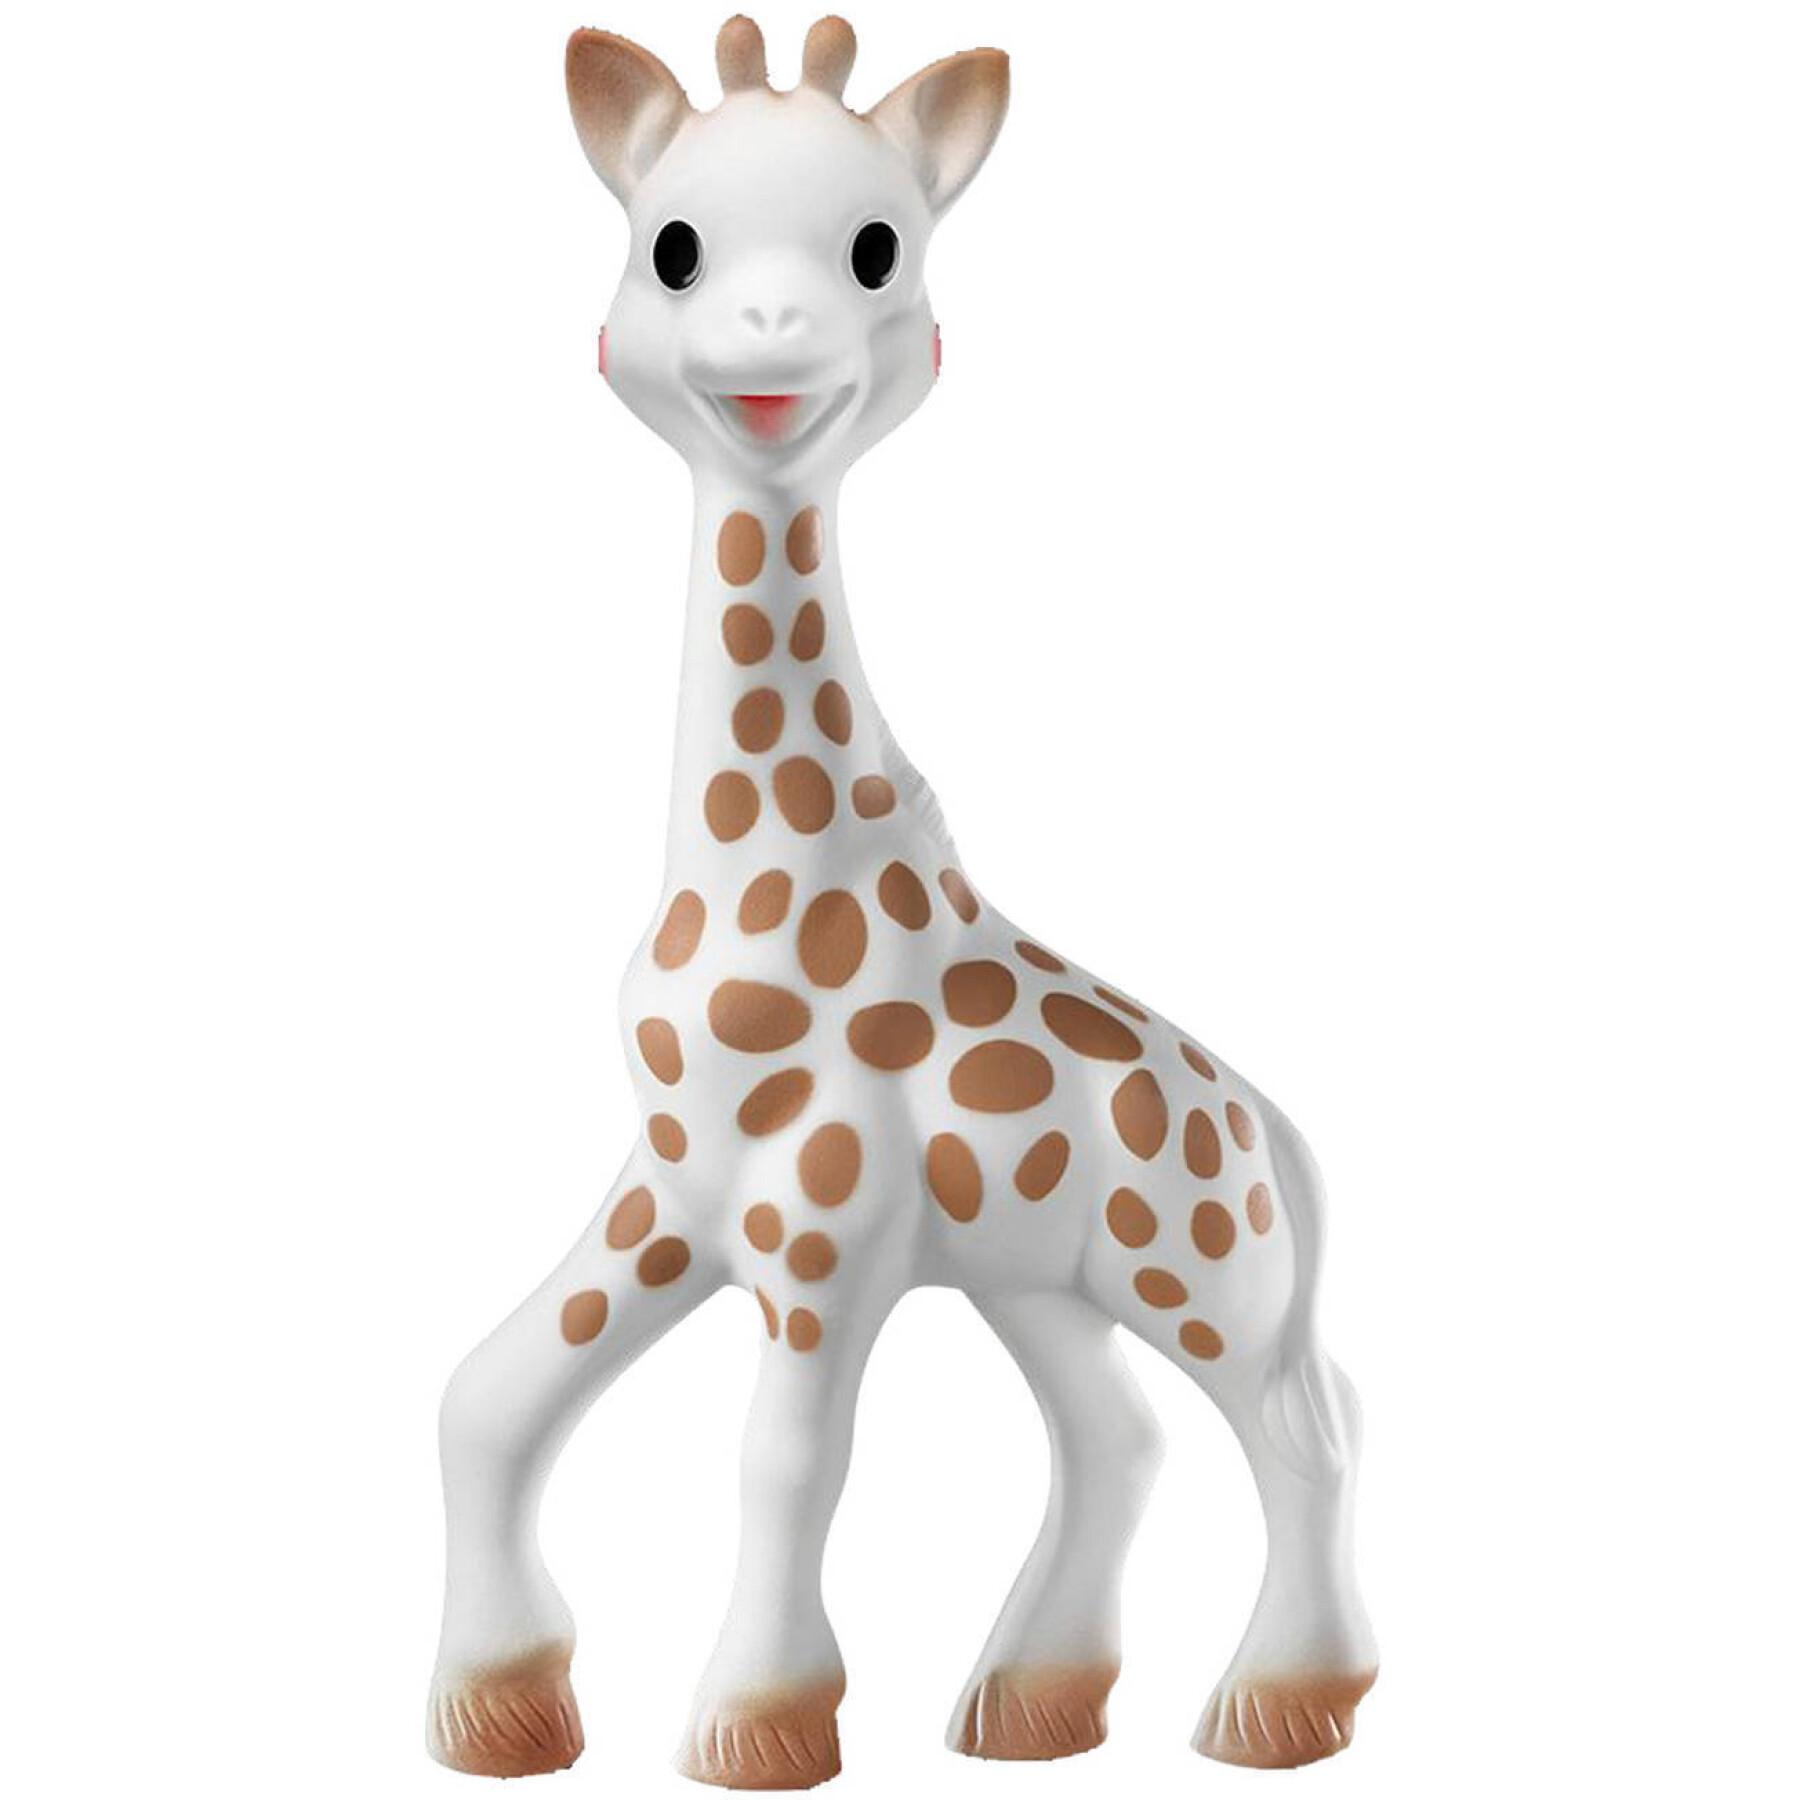 A estatueta da girafa Sophie tão pura Vulli Jouets